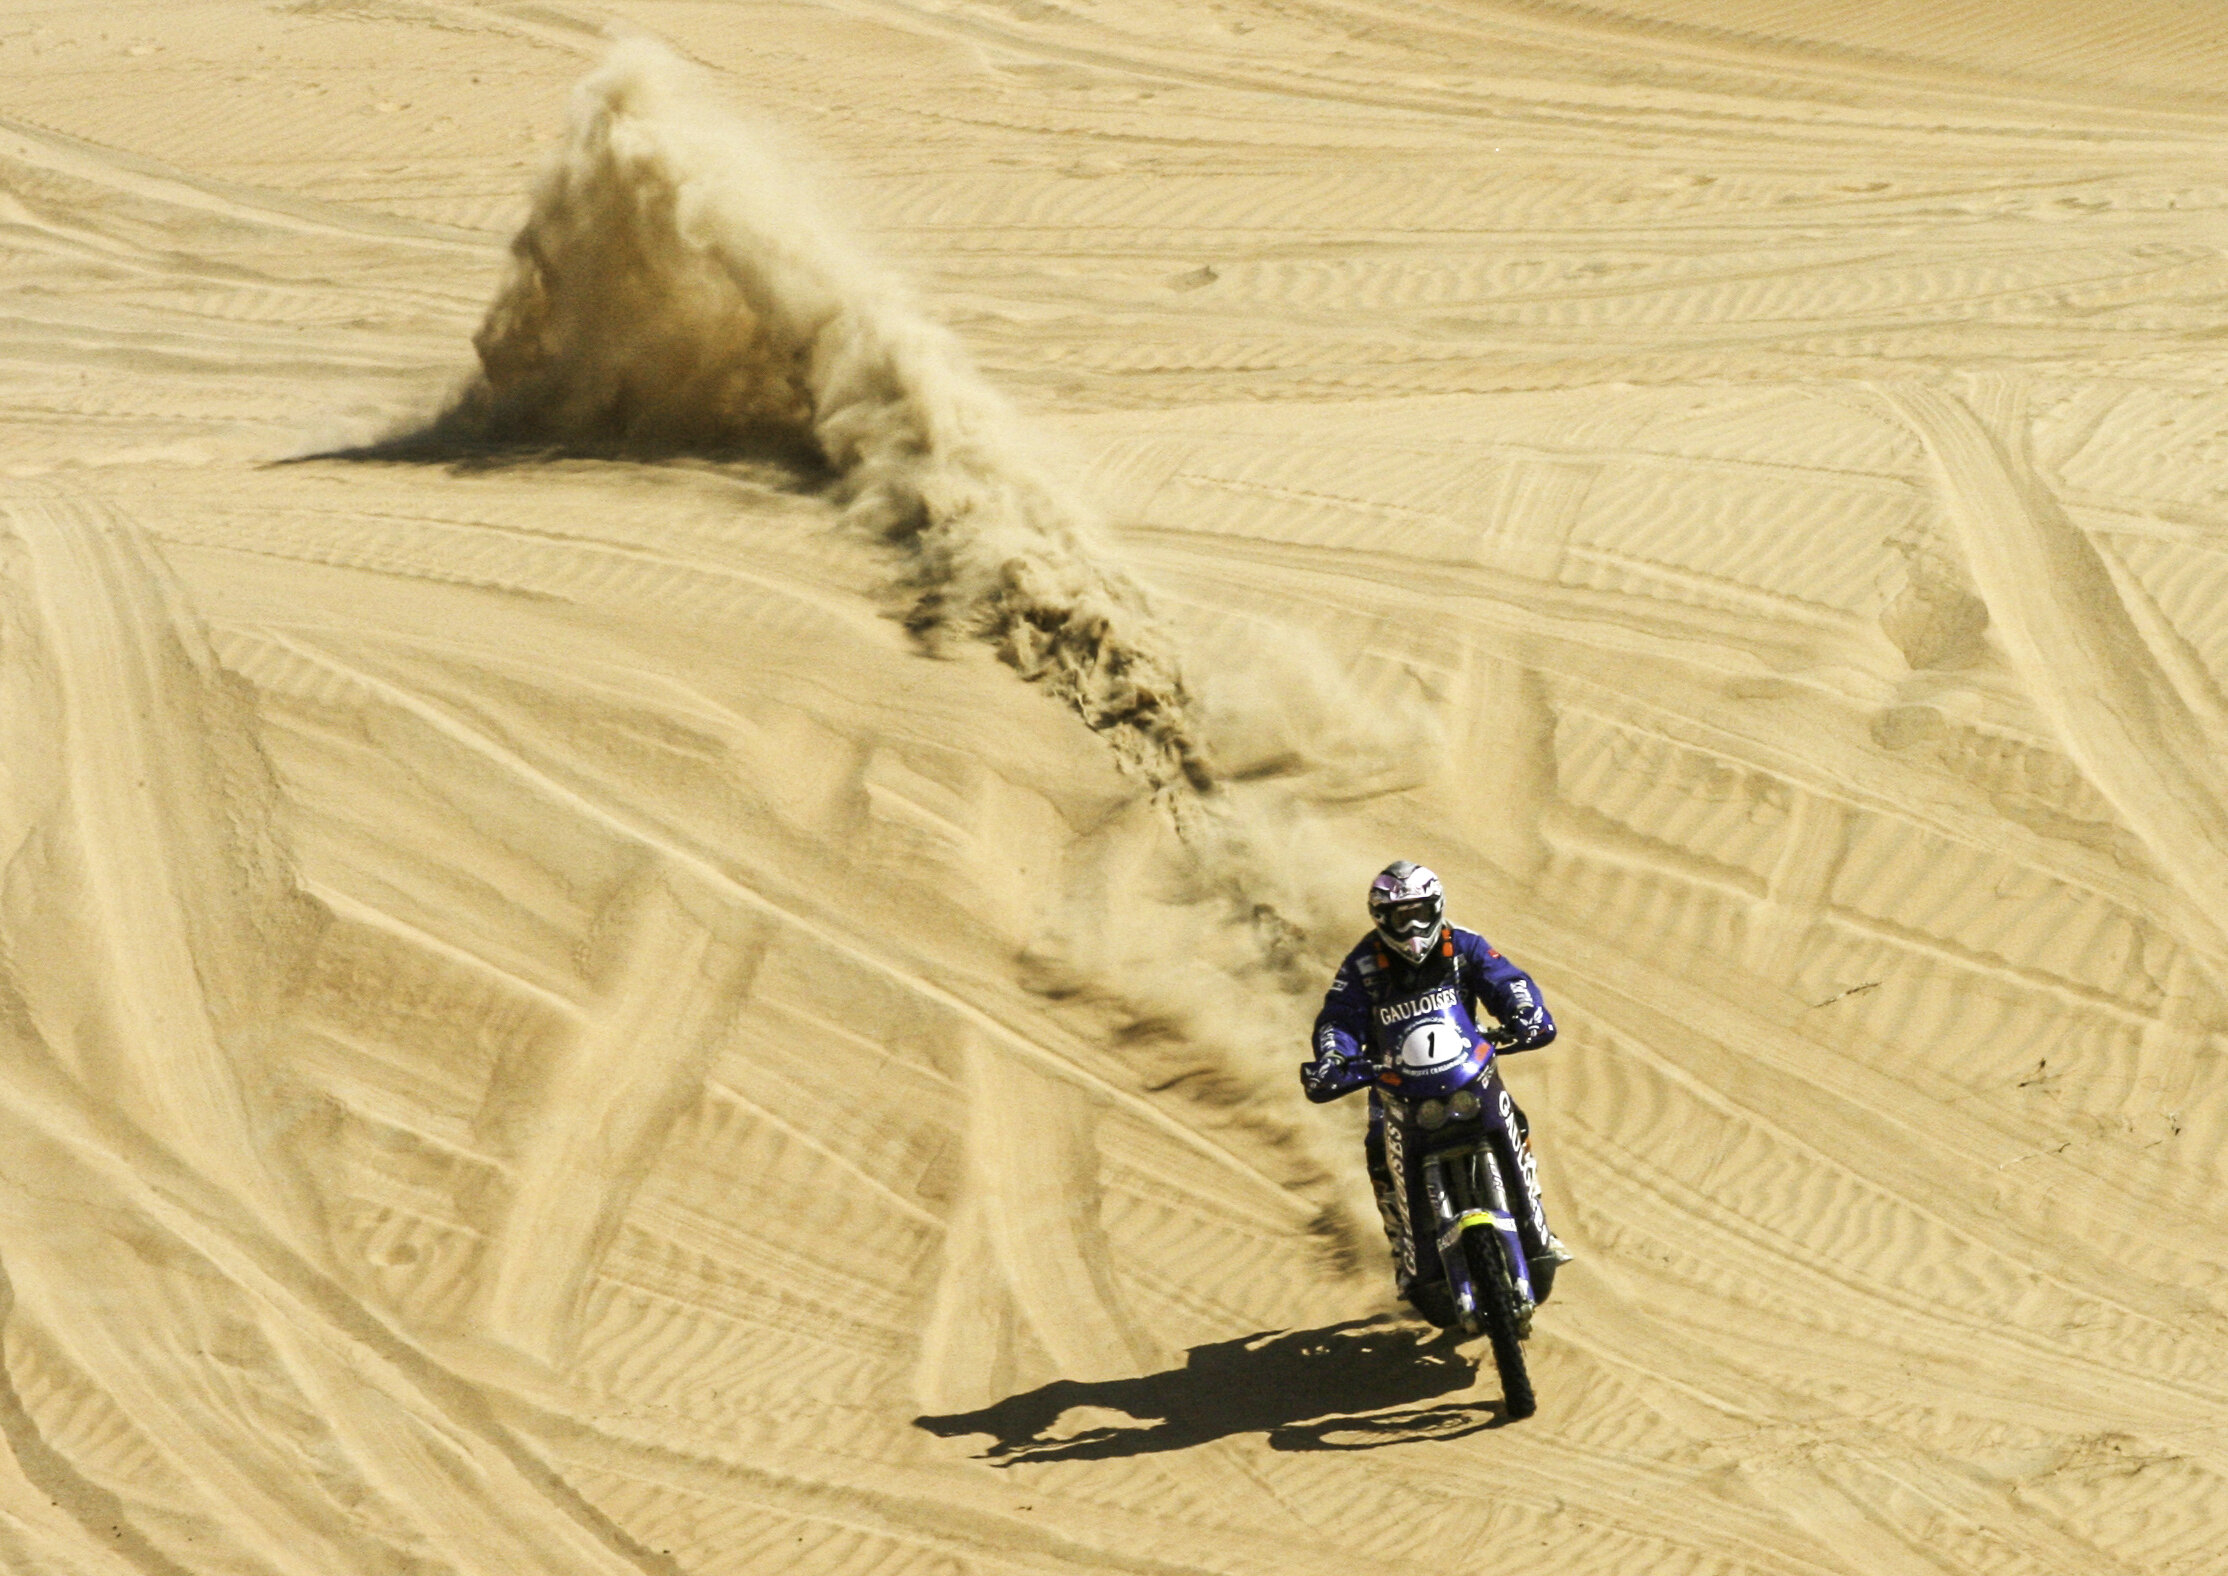 Desert Bike / Cyril Despres